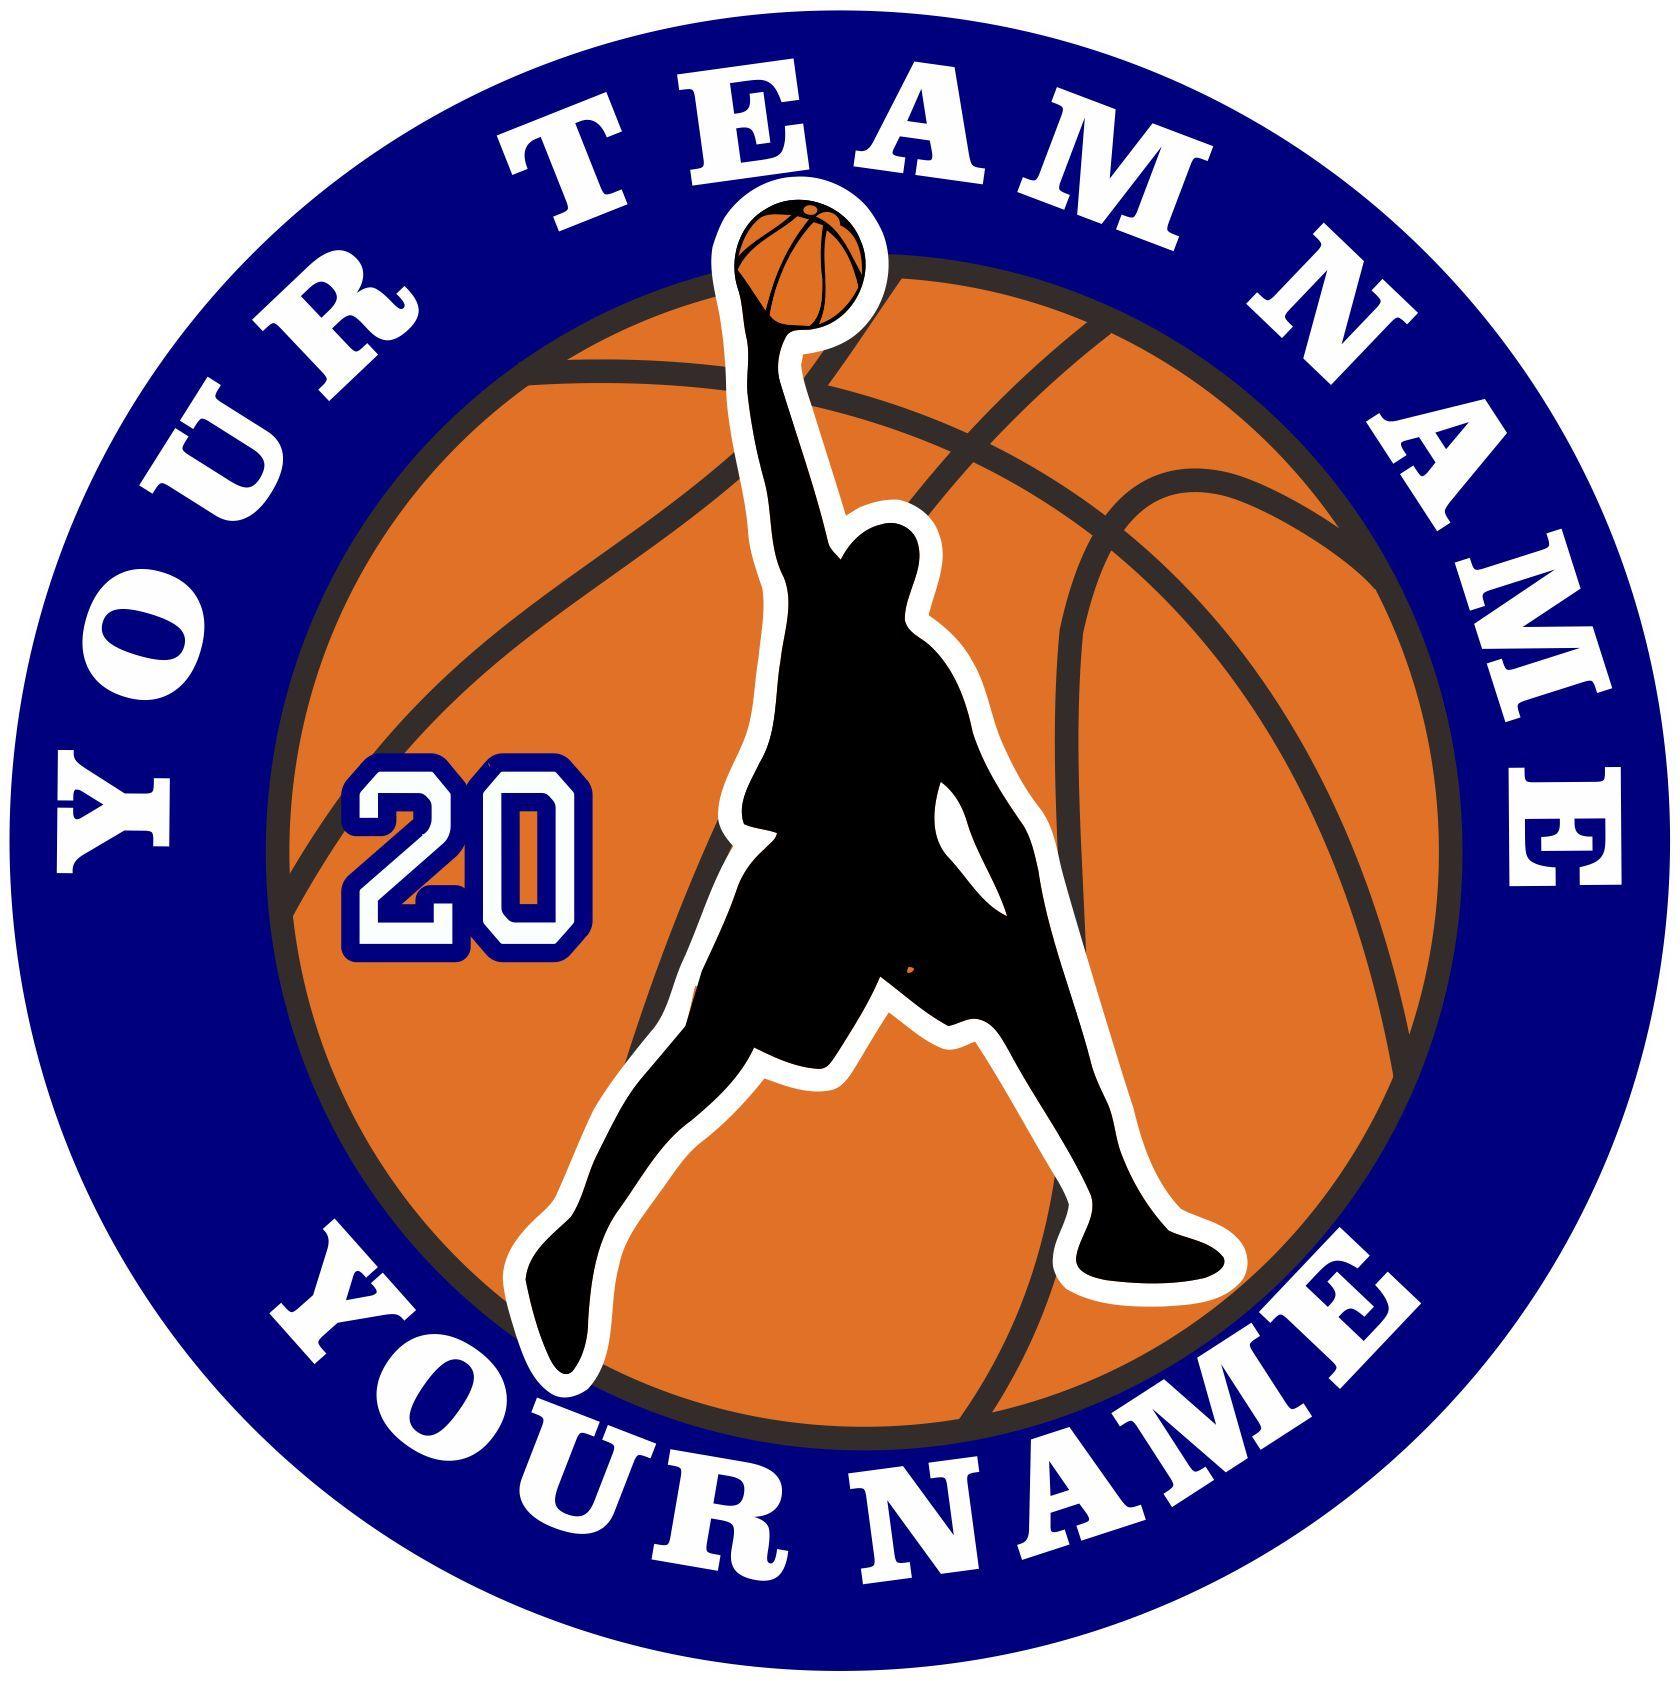 Create Your Own Basketball Logo - Customized Basketball logo 08 [Basketball logo 08]$3.50 : iron